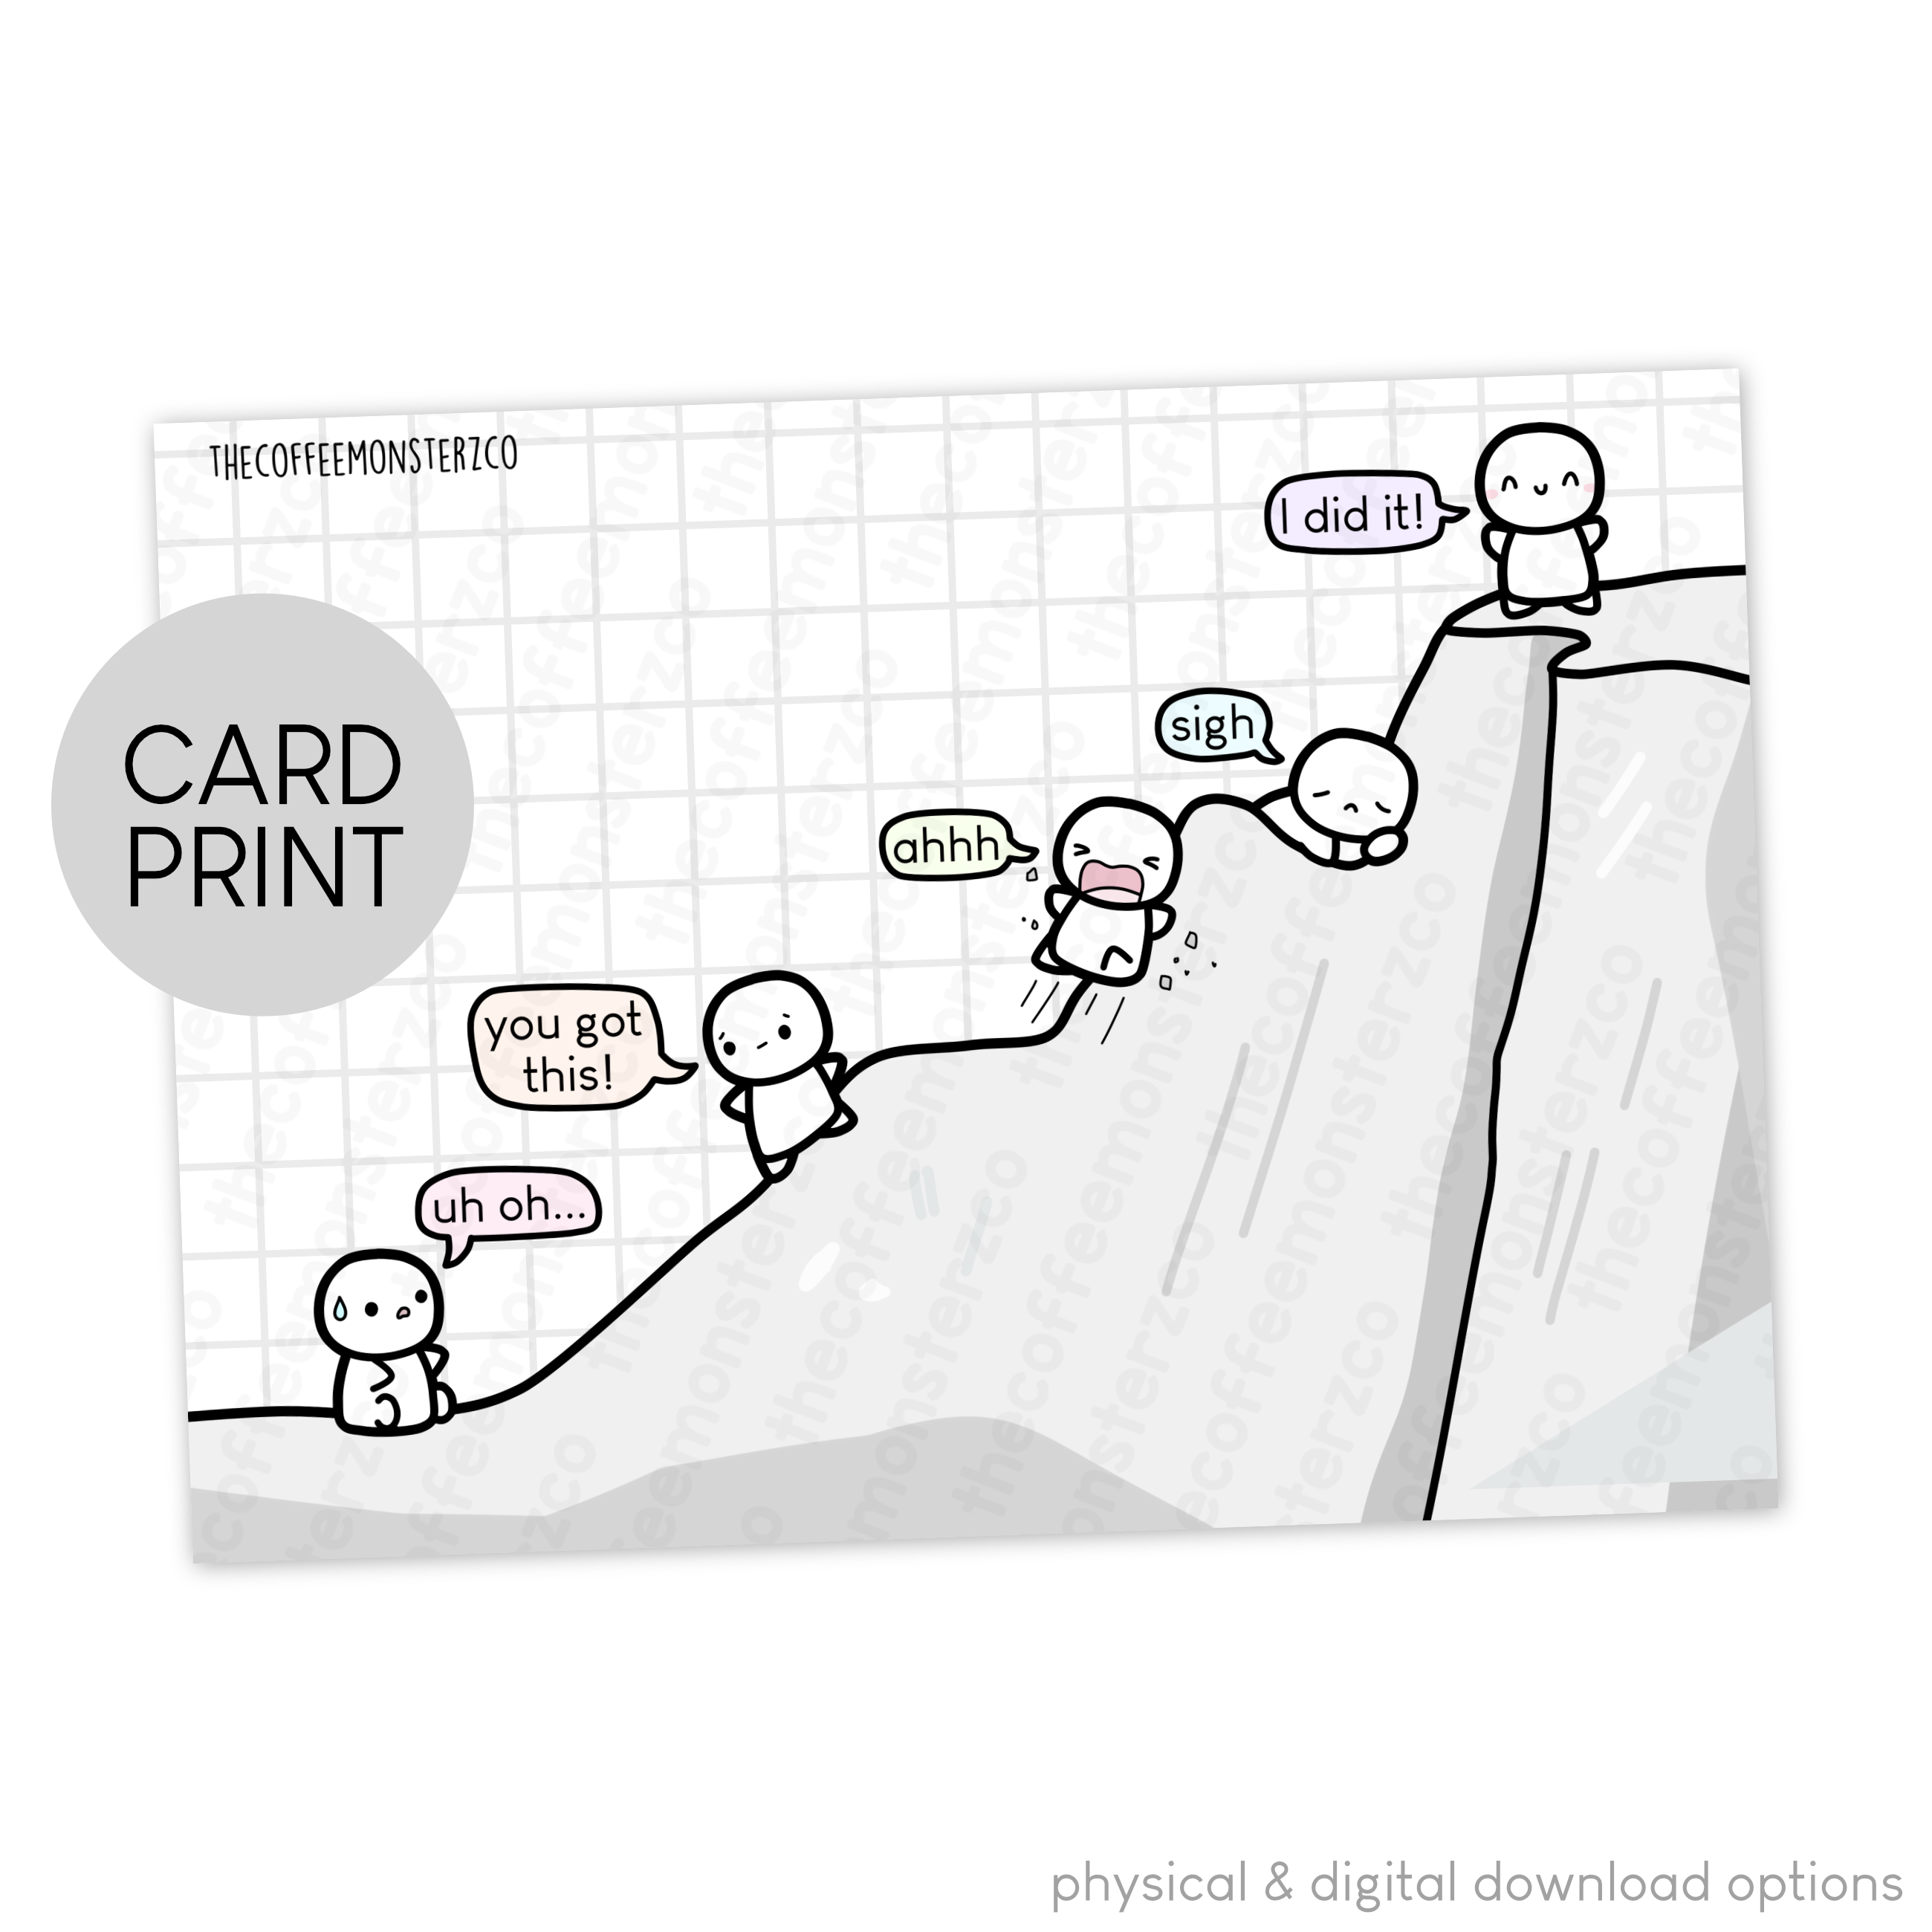 Reaching Goals - Card Print